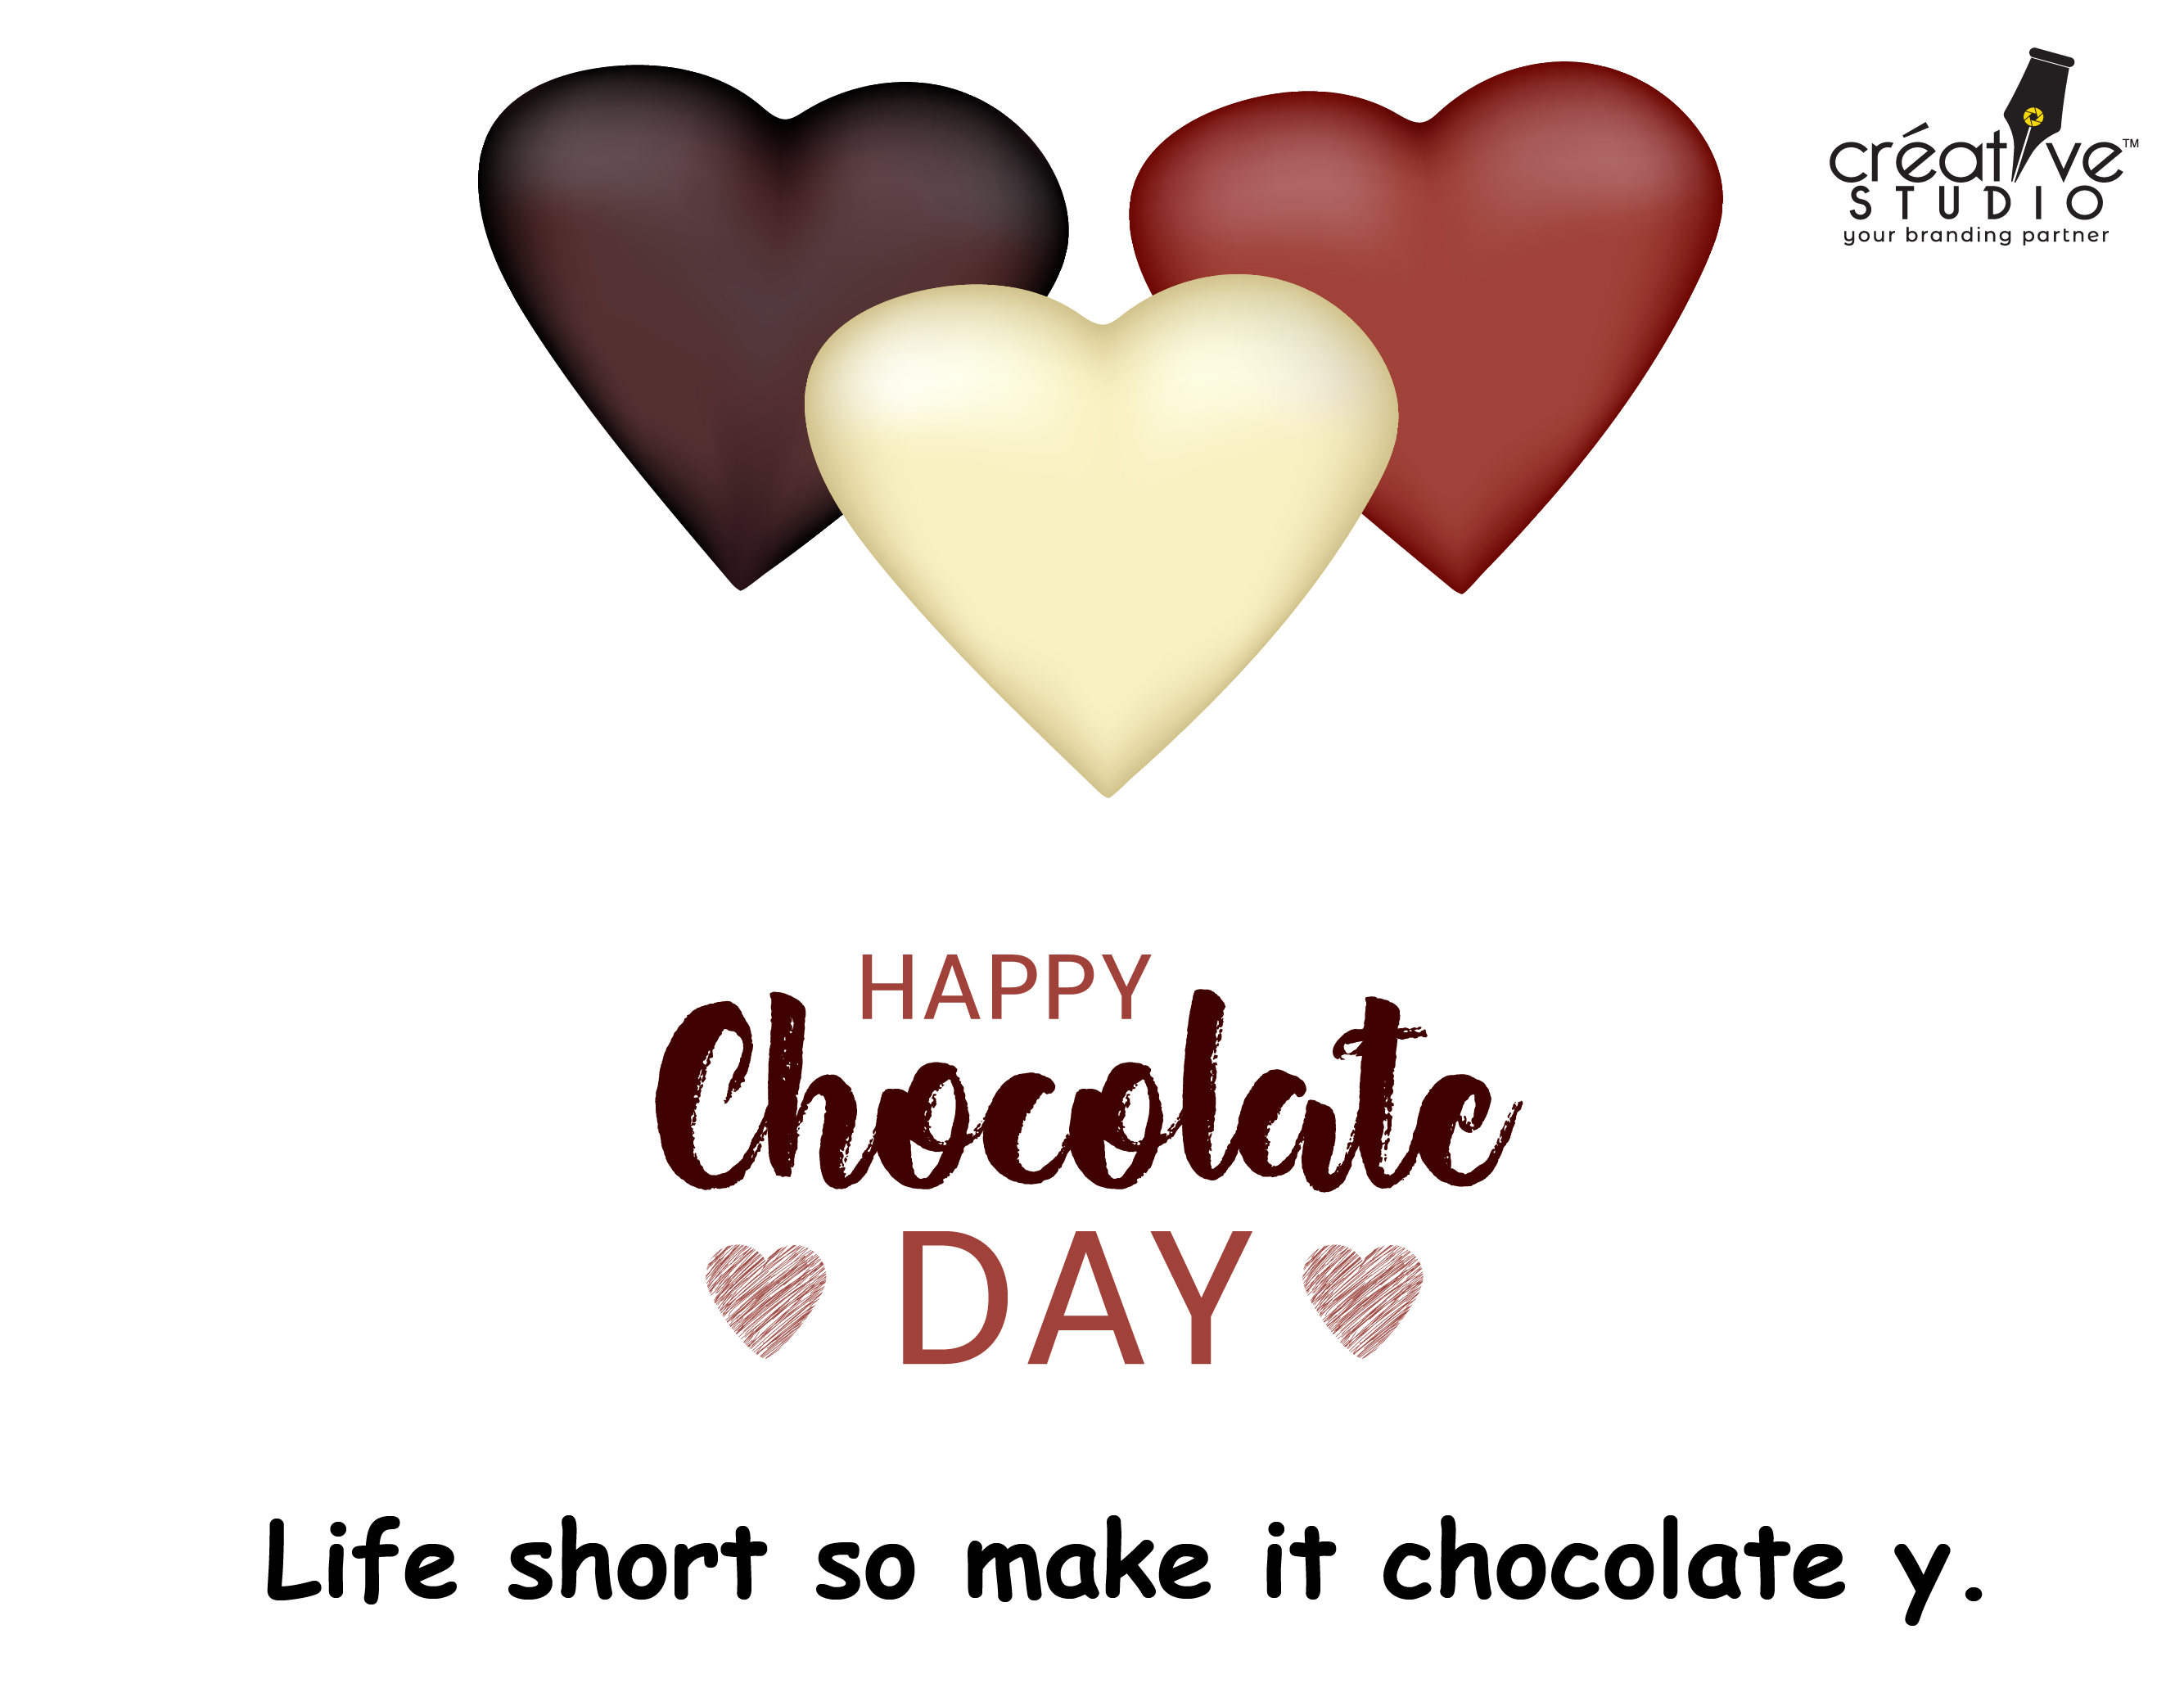 CHOCOLATE DAY 02 - Chocolate